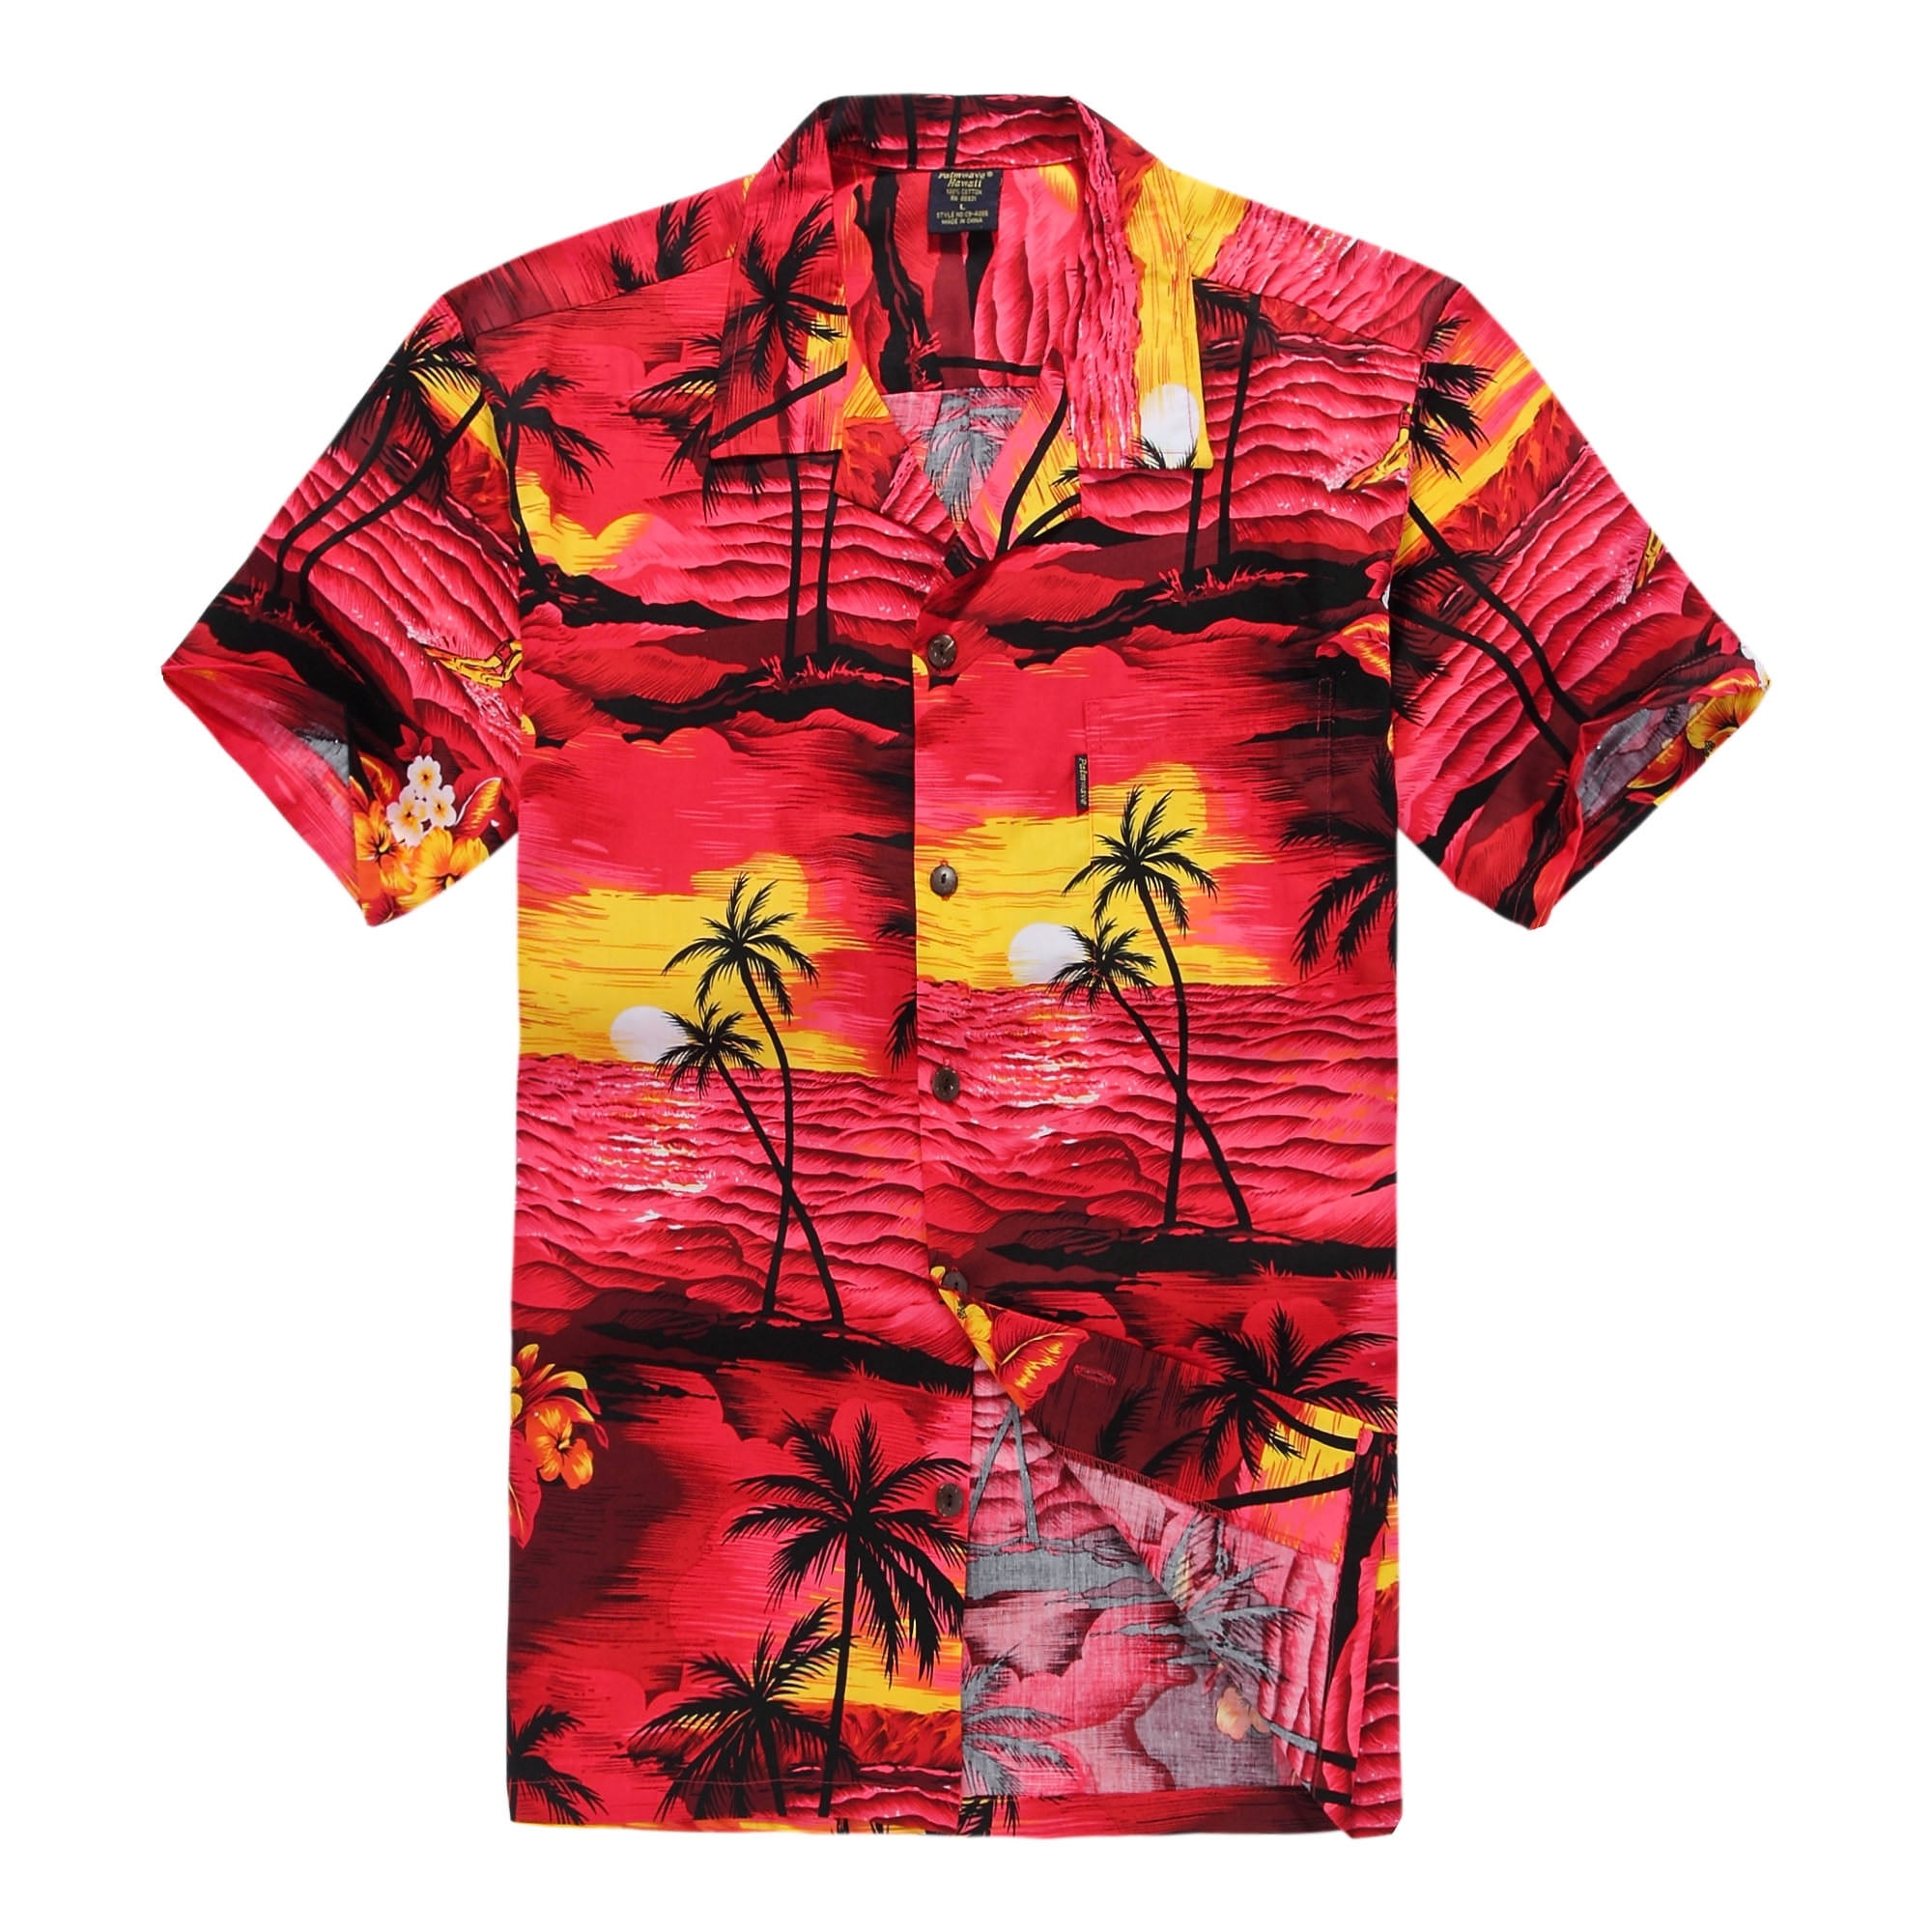 Matching Hawaiian Clothing Available Cocktail Chest Band Hawaiian Shirt Made in Hawaii Holiday Shirt From Hawaii